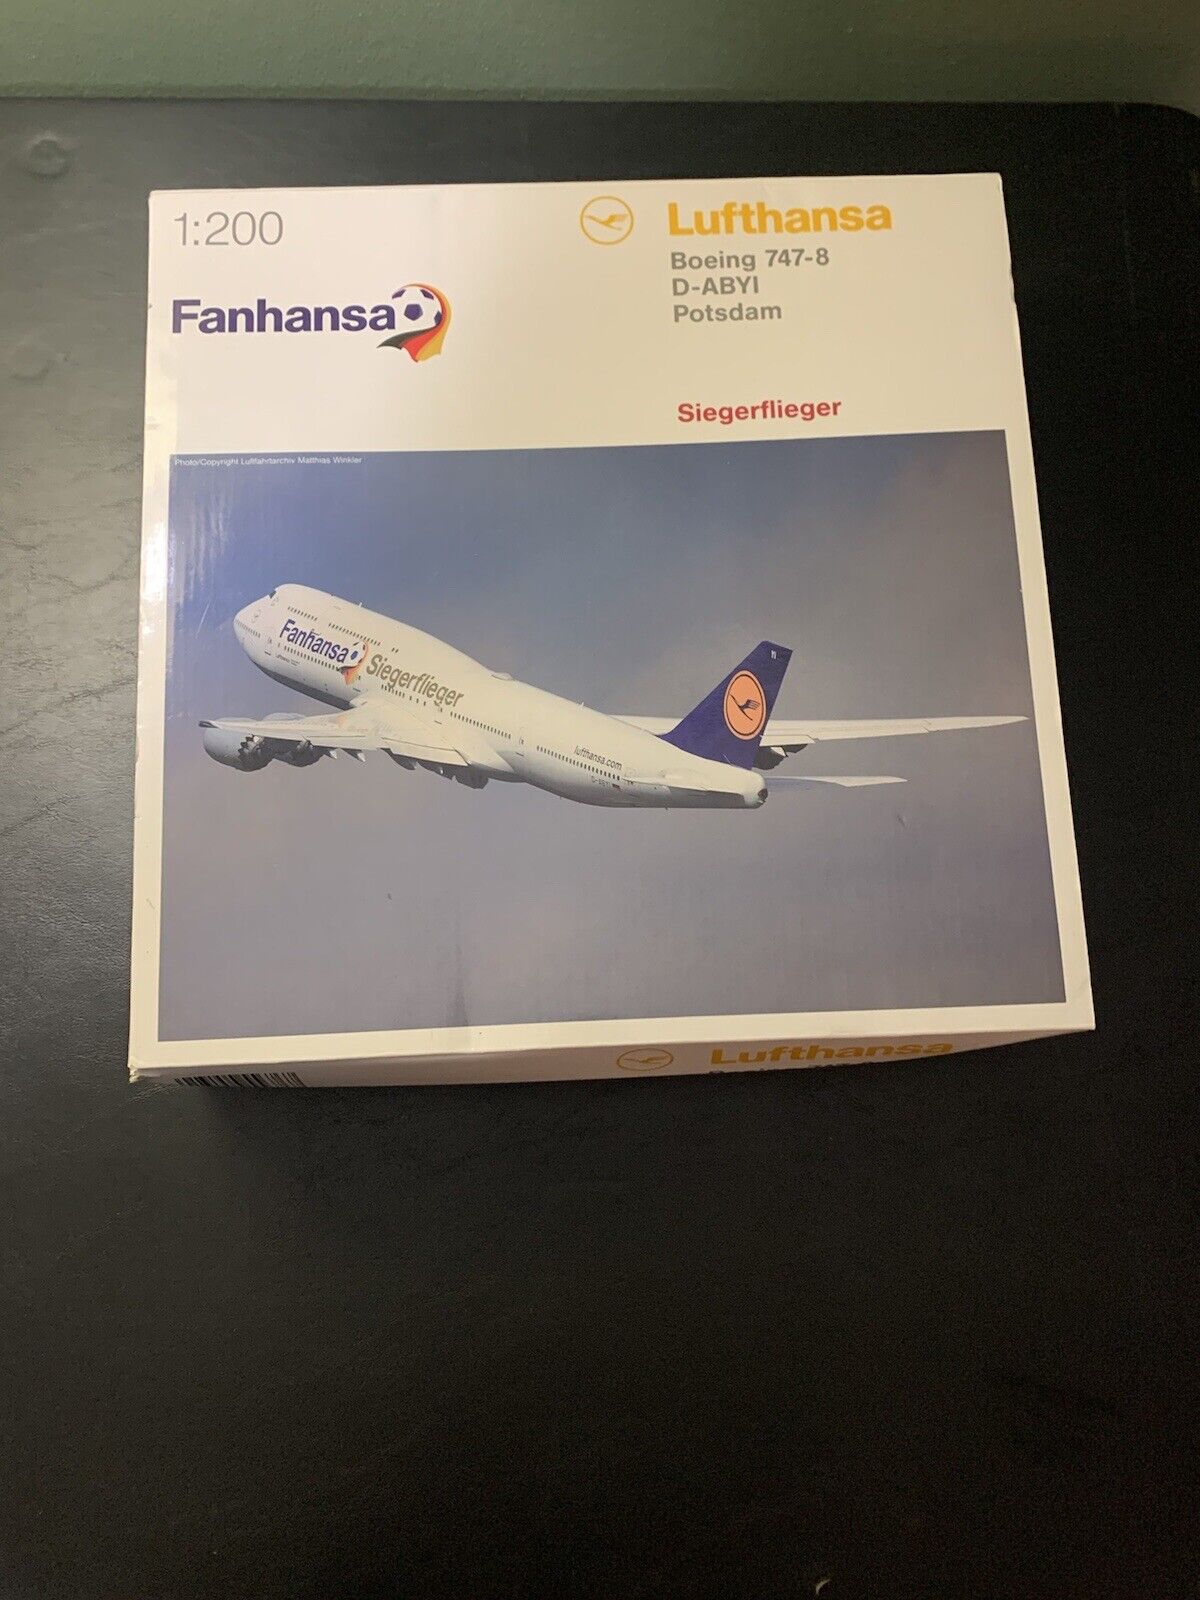 Herpa 1/200 Lufthansa "fanhansa" Boeing B747-8 D-abyi Postsdam 556767